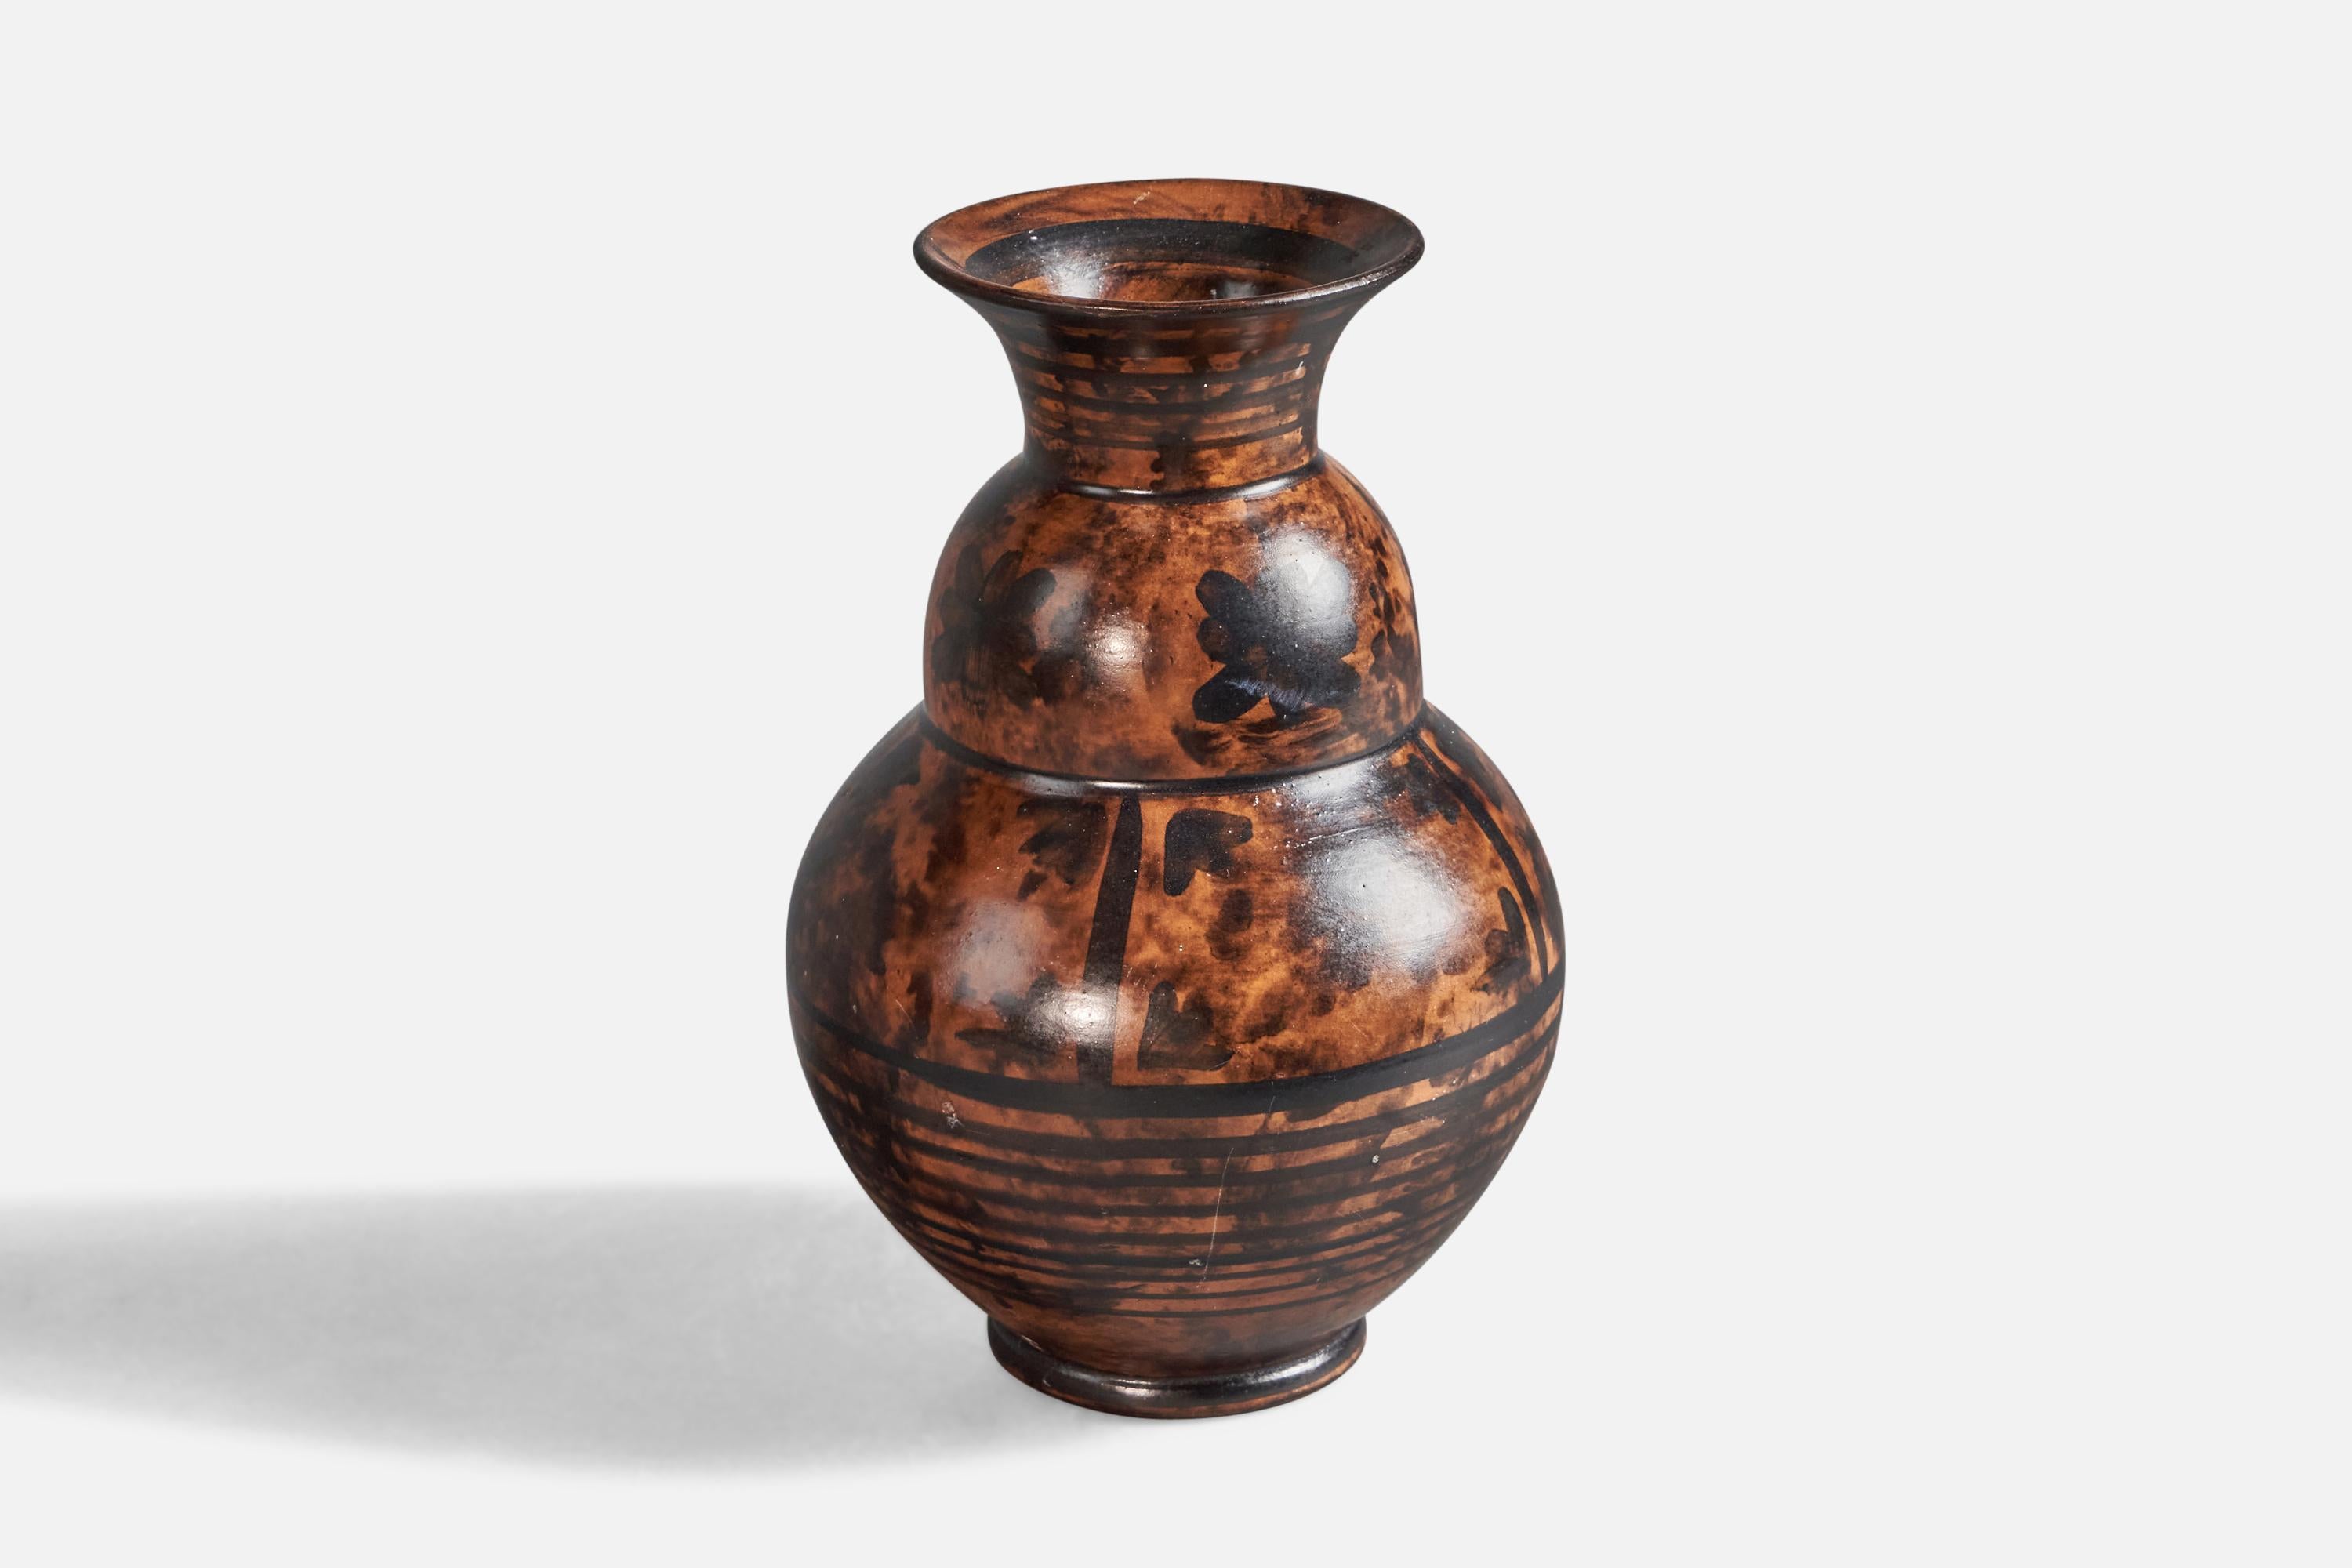 A brown and black-glazed earthenware vase, designed and produced by Nittsjö, Sweden, c. 1930s.